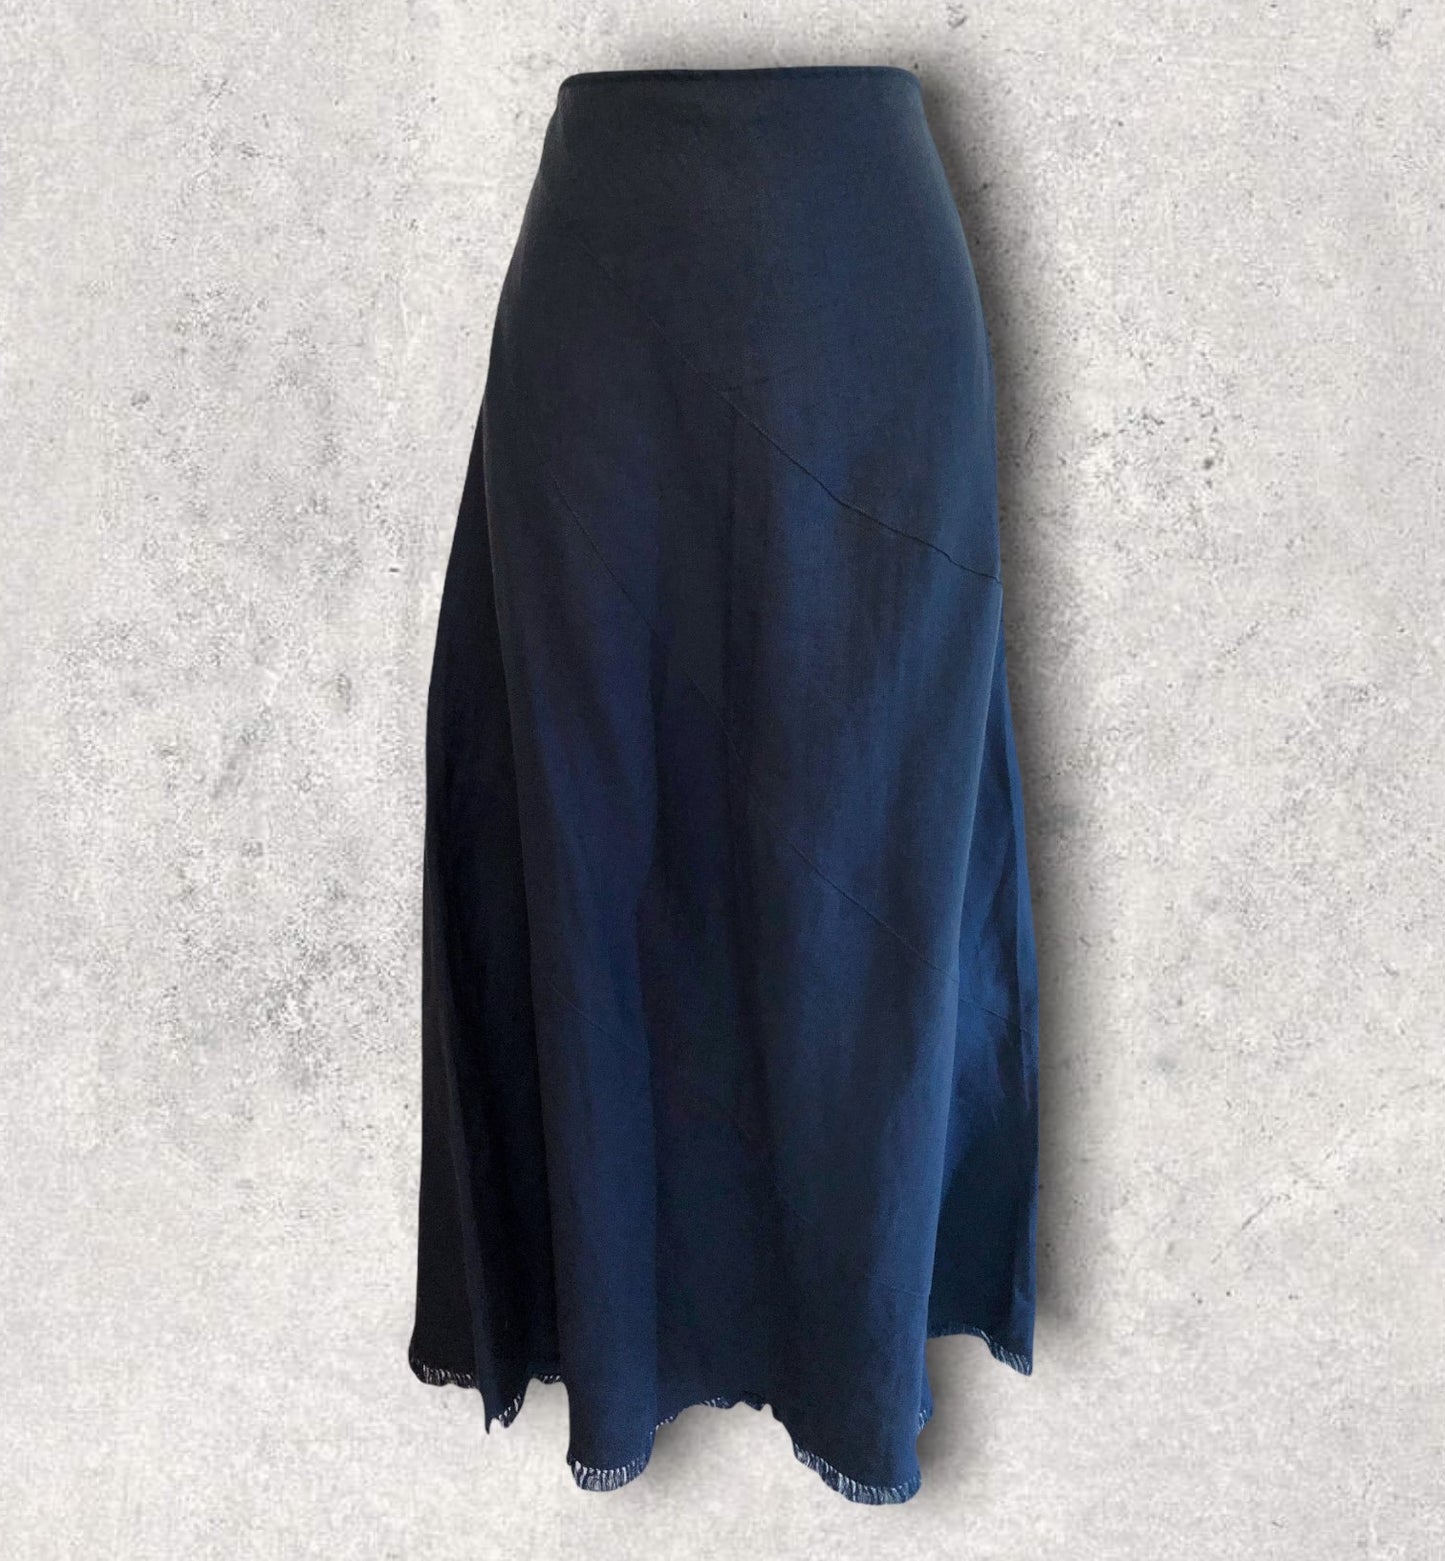 Nougat London Teal Linen A-Line Long Skirt UK 10 US 6 EU 38 Timeless Fashions